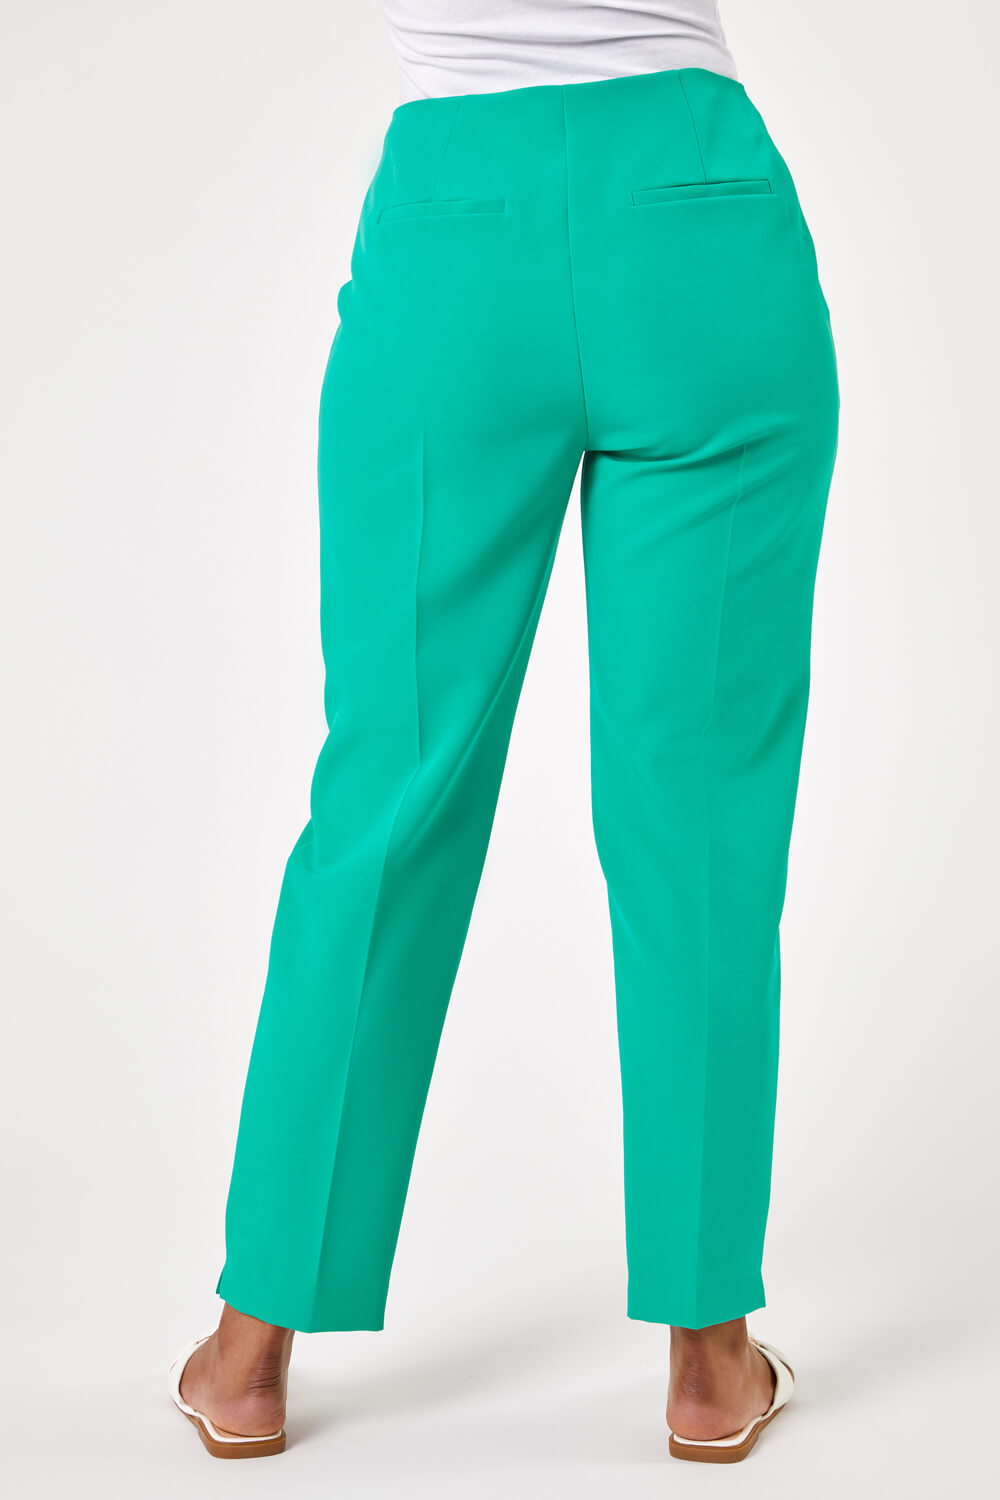 Ba&sh Paris Wonka High Rise Tapered Trousers Pants Size XS Mint Green | eBay